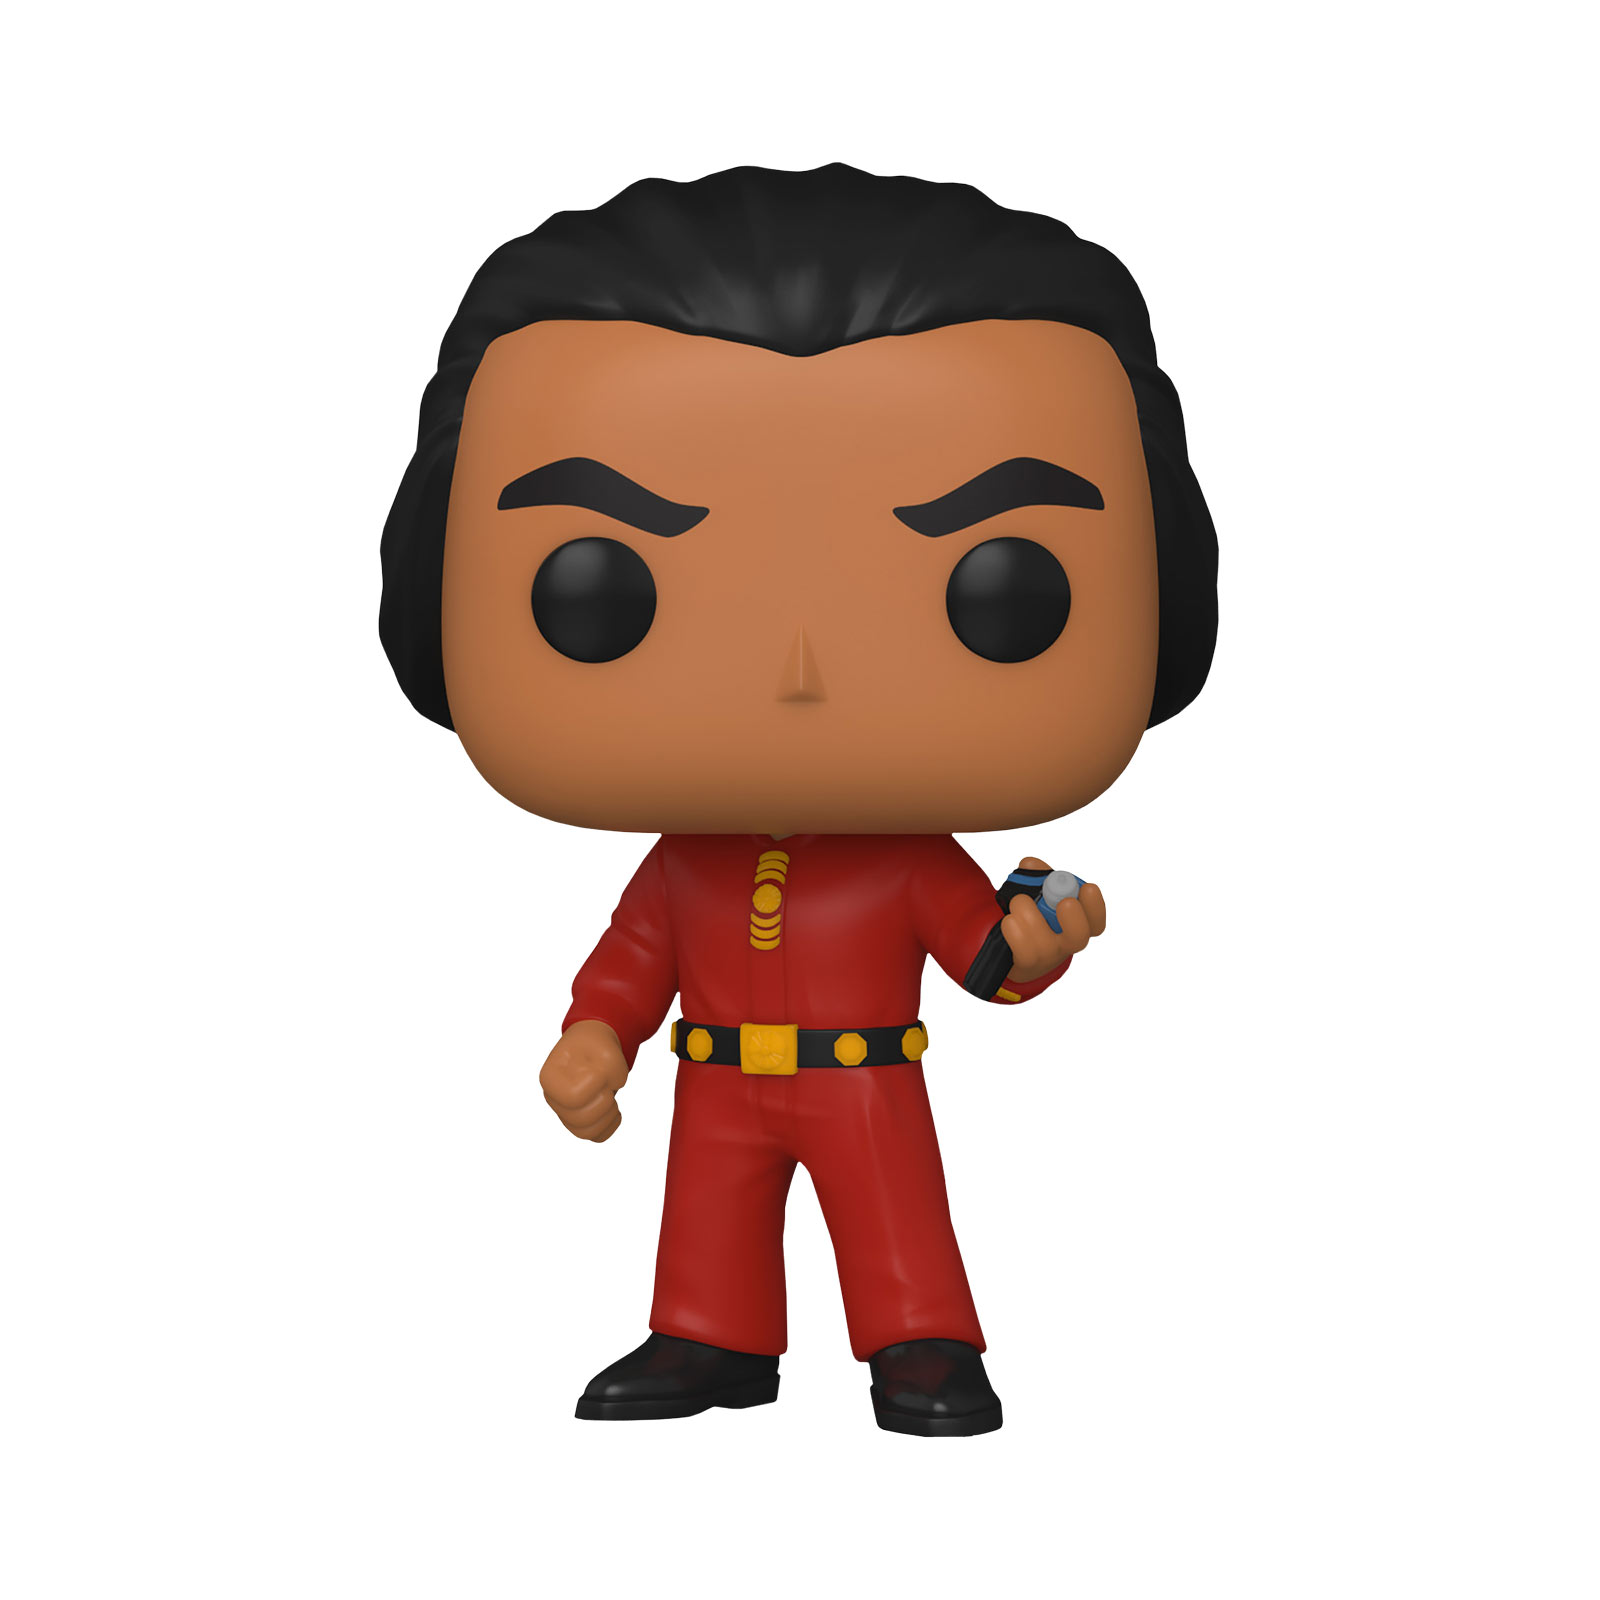 Star Trek - Khan Funko Pop Figure